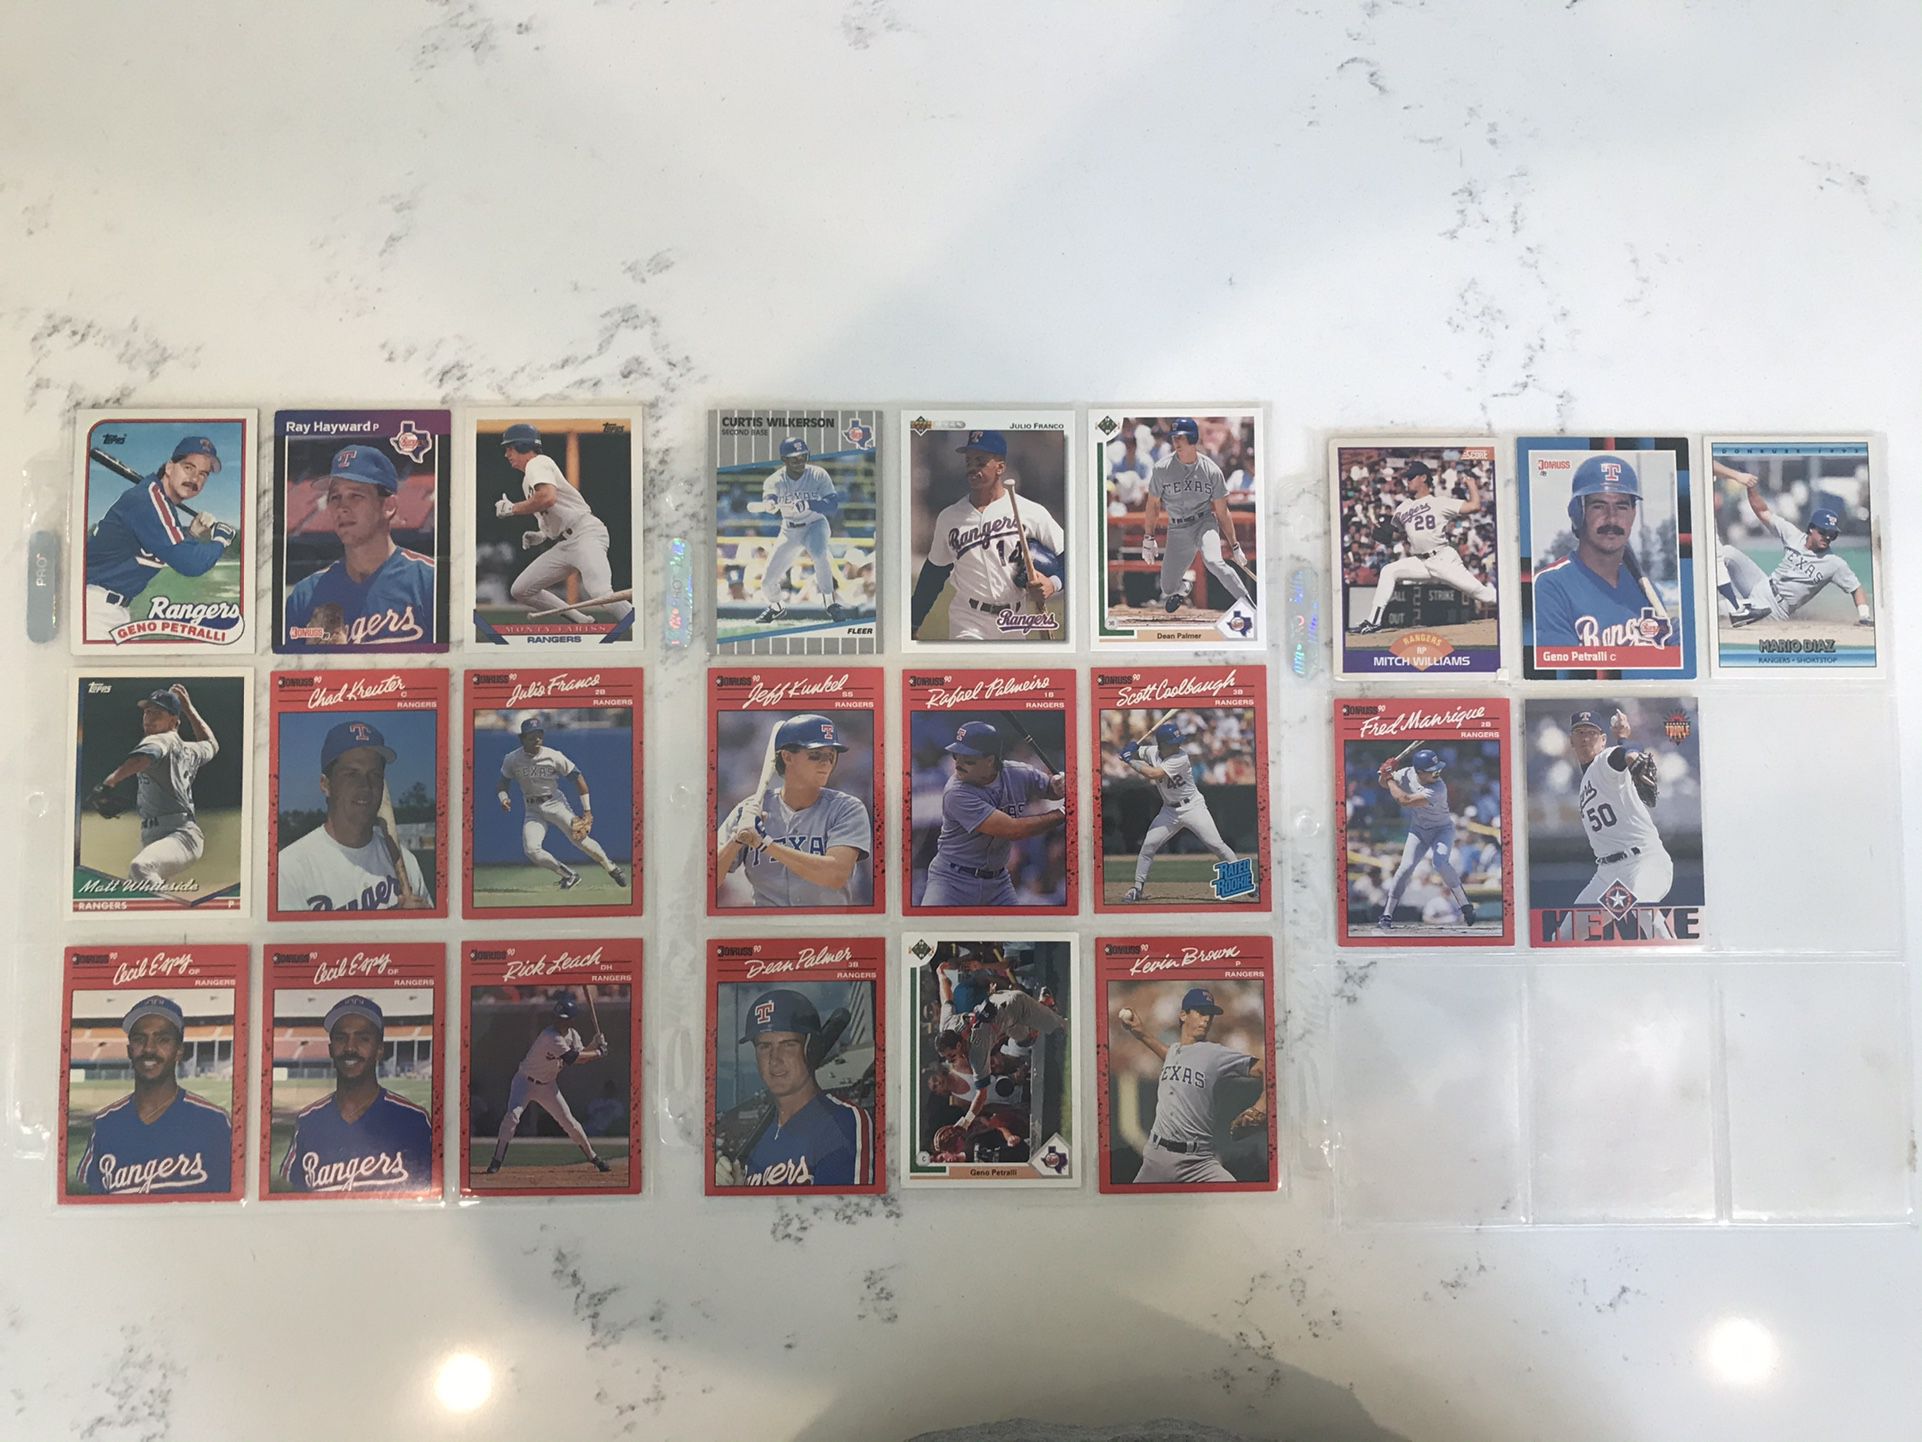 Lot Of 23 Texas Rangers Baseball Cards